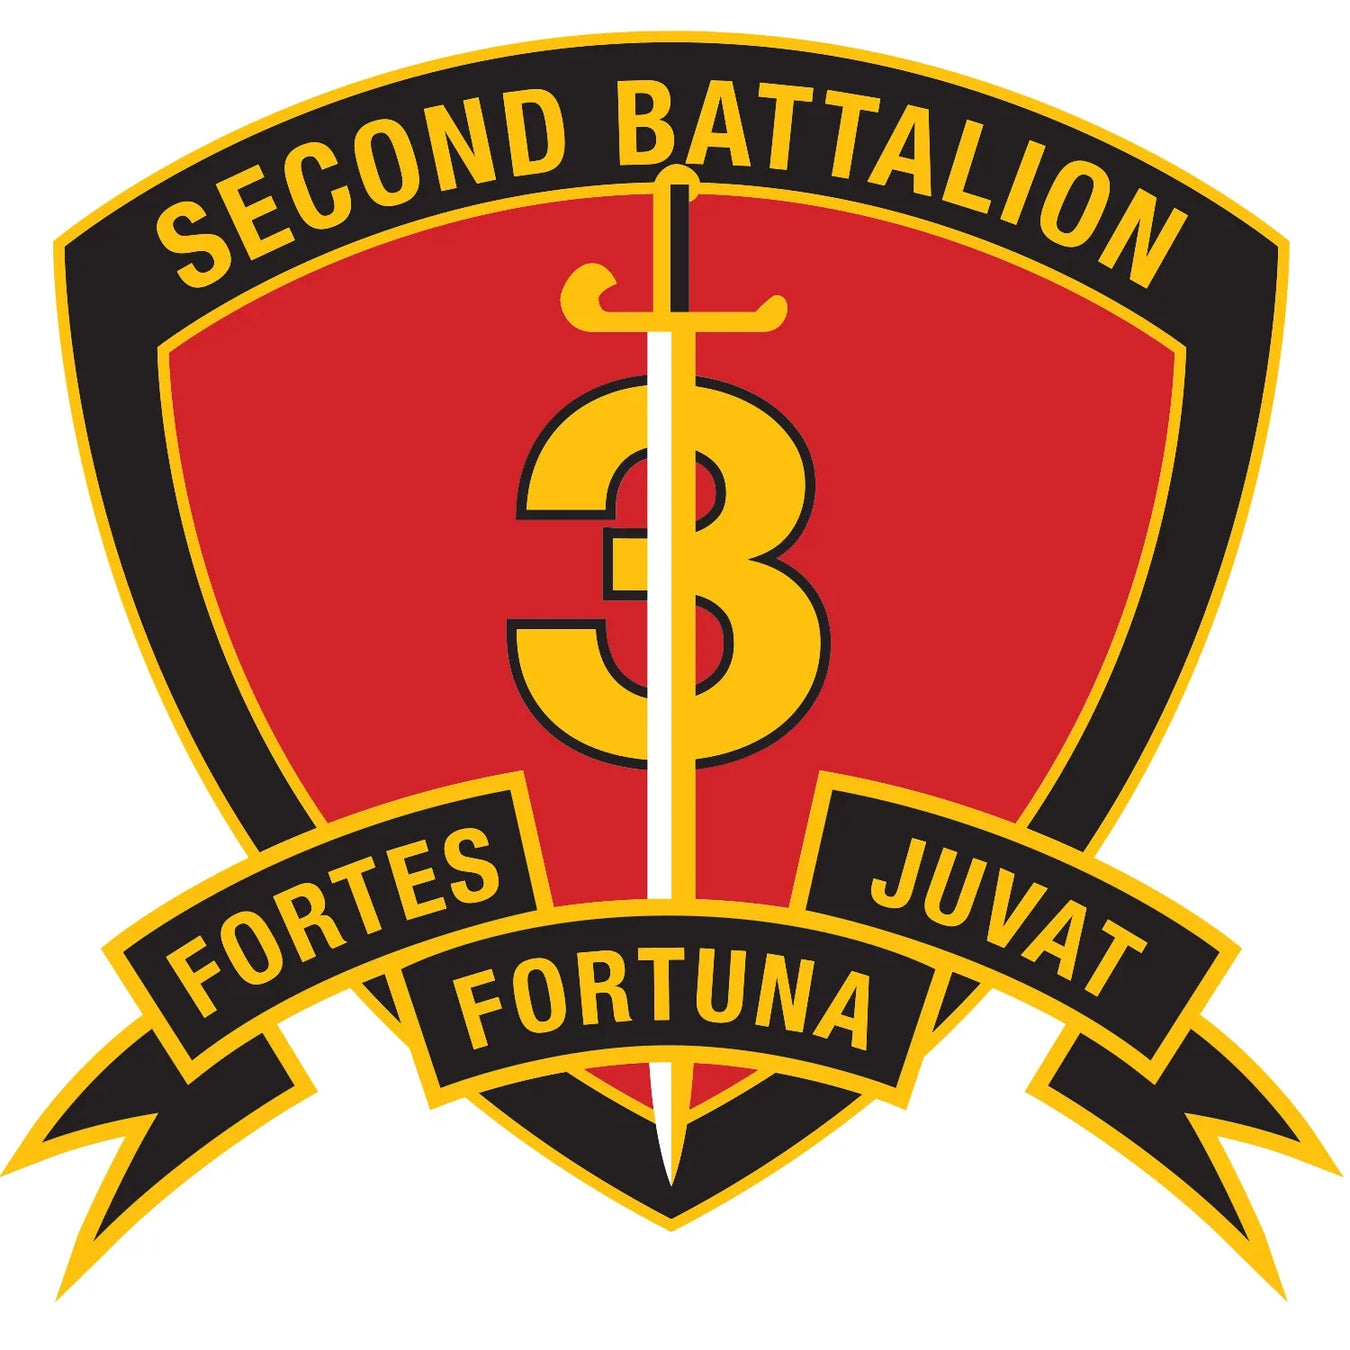 2nd Battalion, 3rd Marines